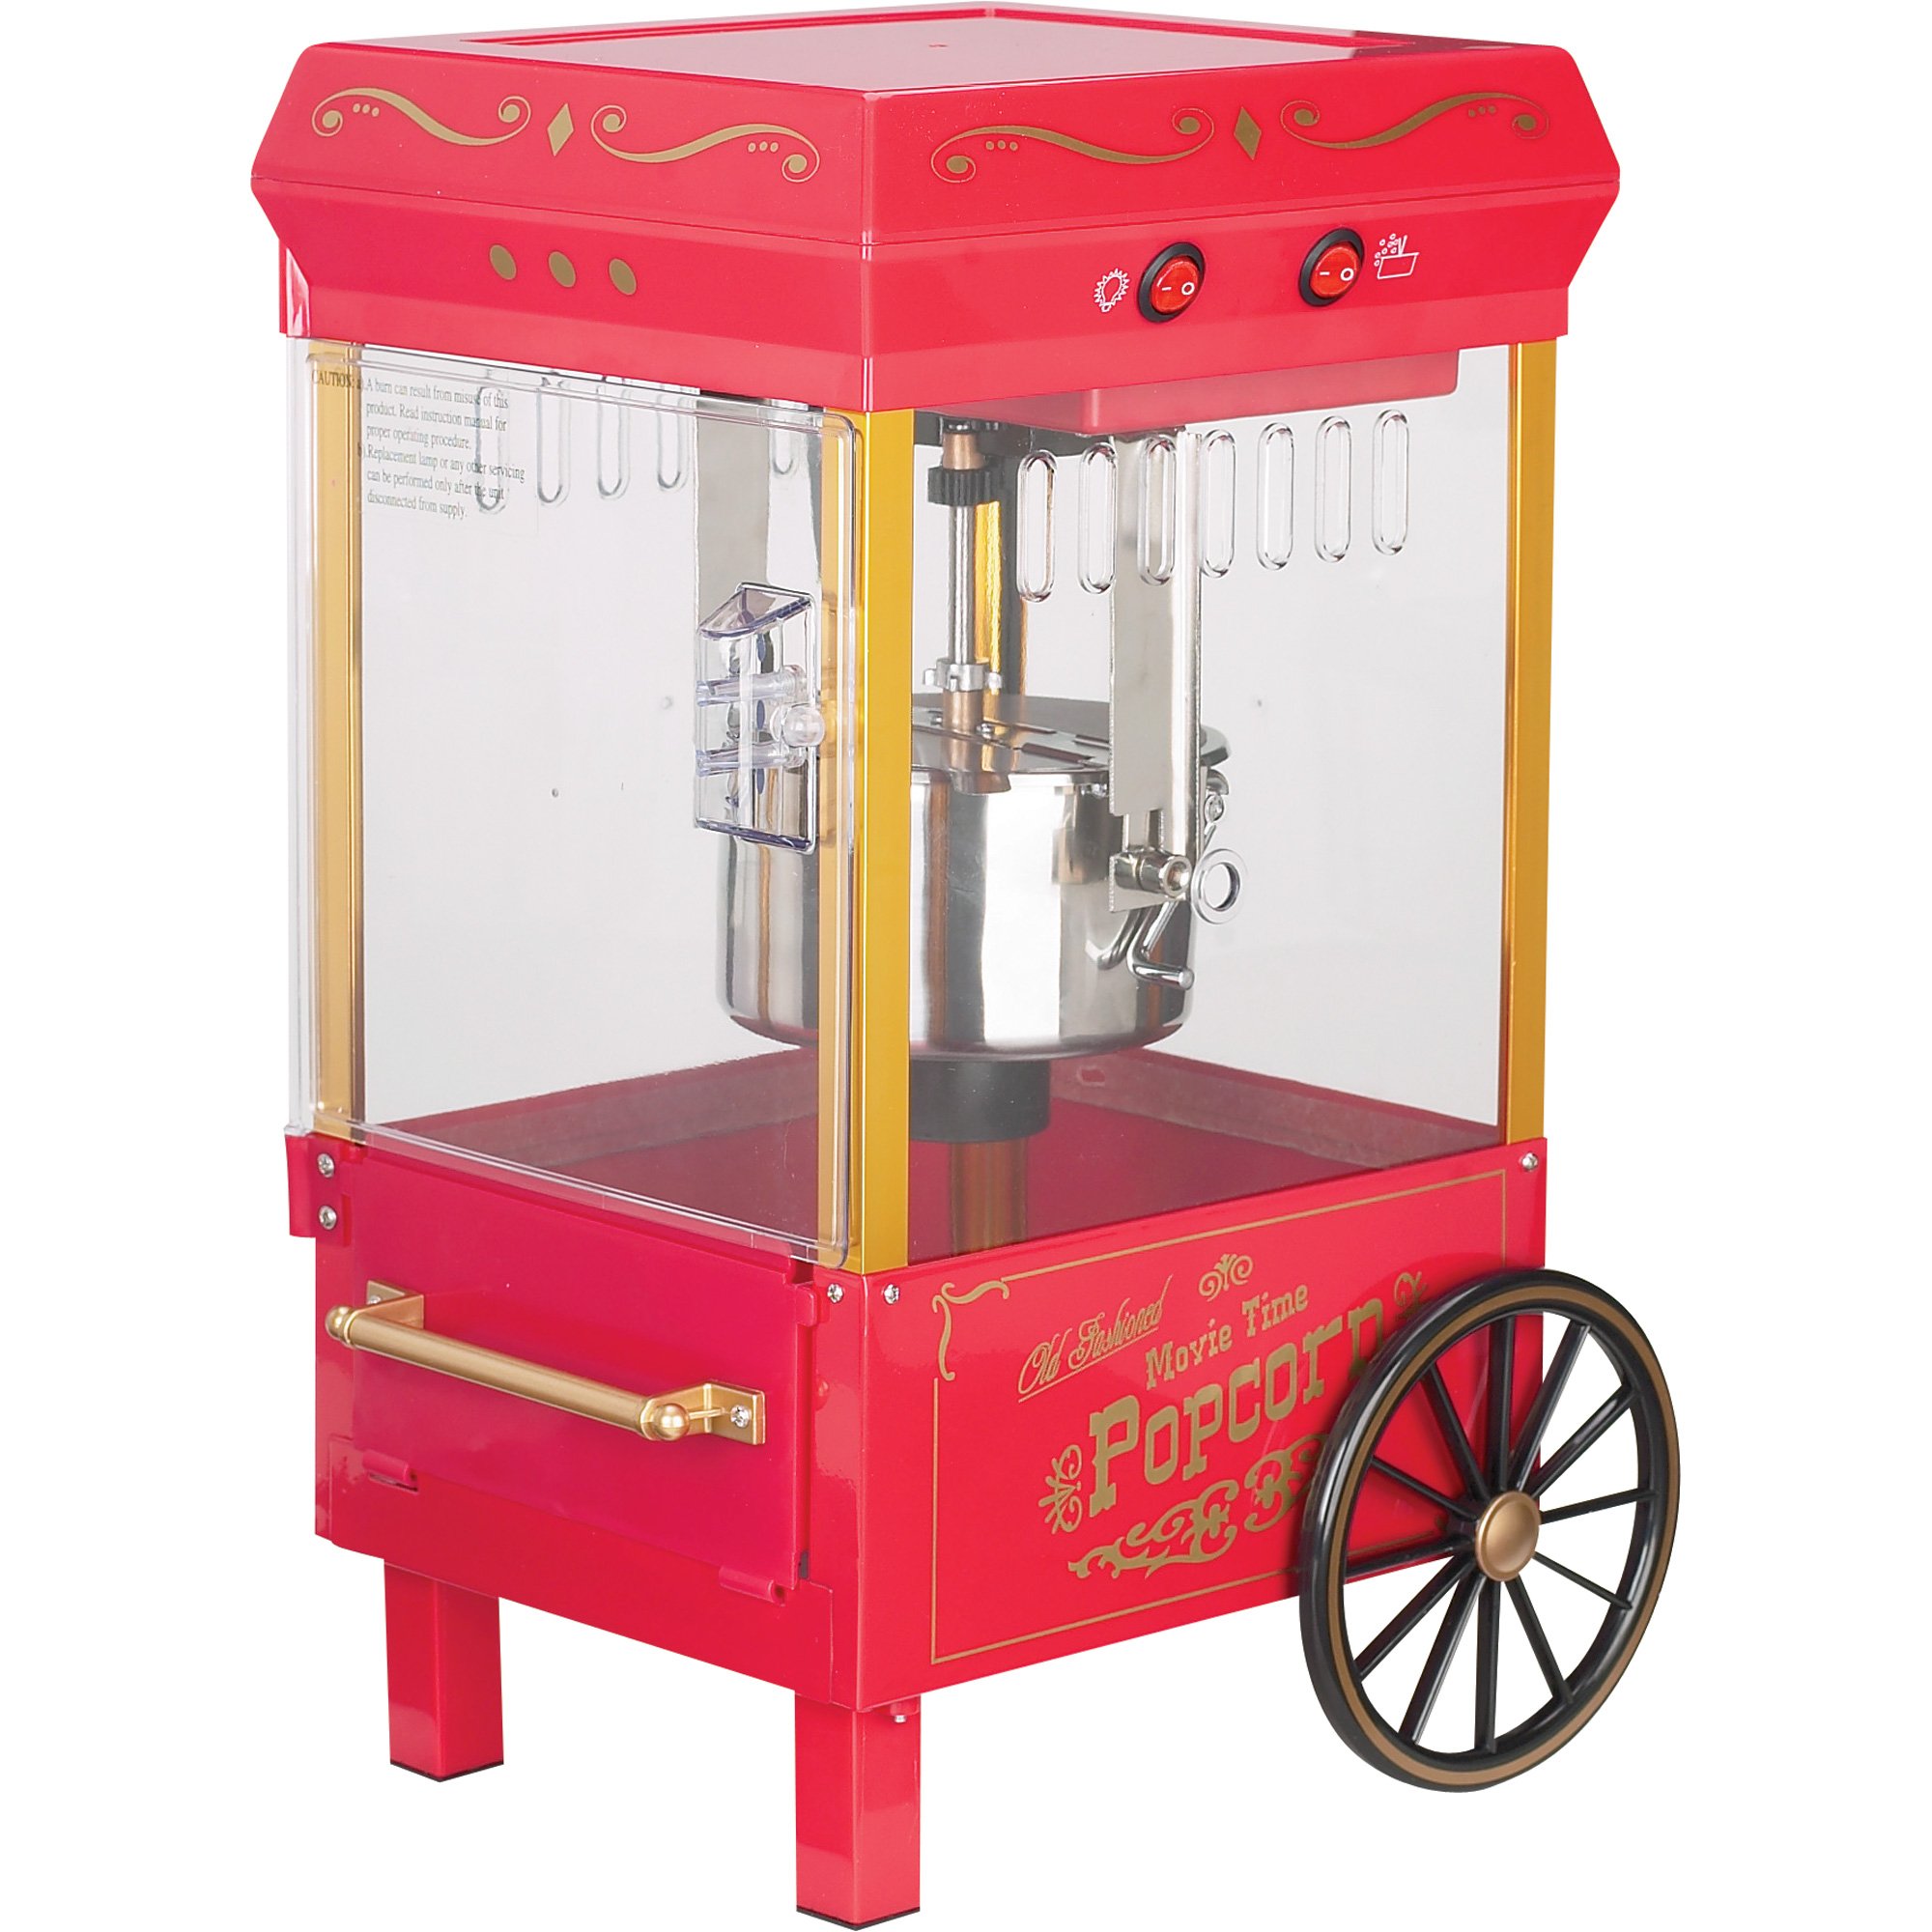 Nostalgia Electrics Kettle Popcorn Machine, Model# KPM-508